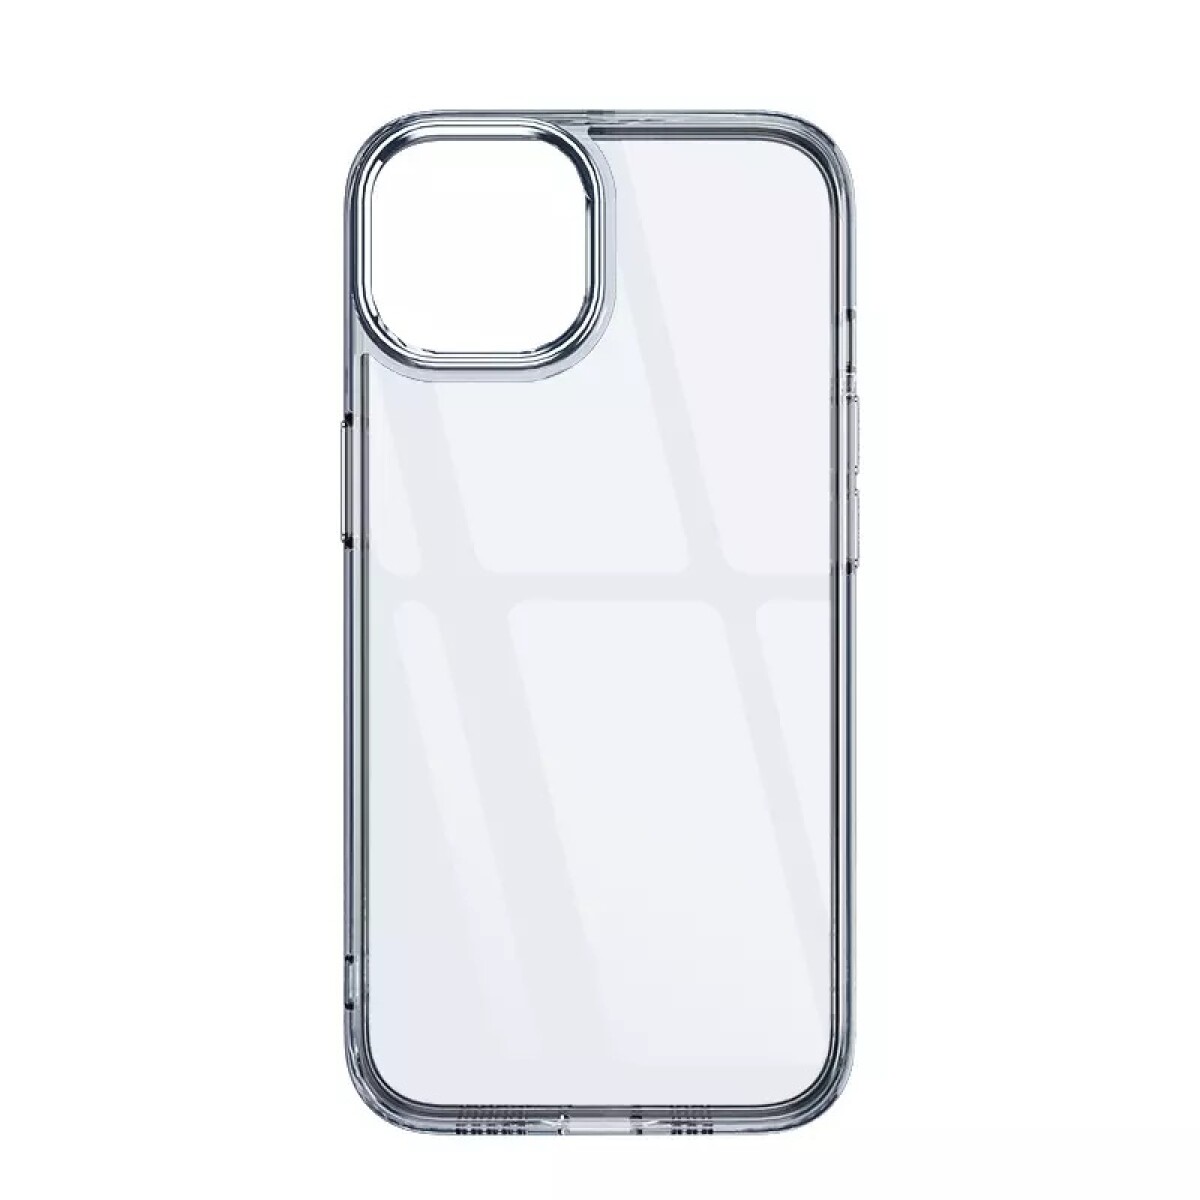 Protector case armor tpu para iphone 13 pro max Transparente